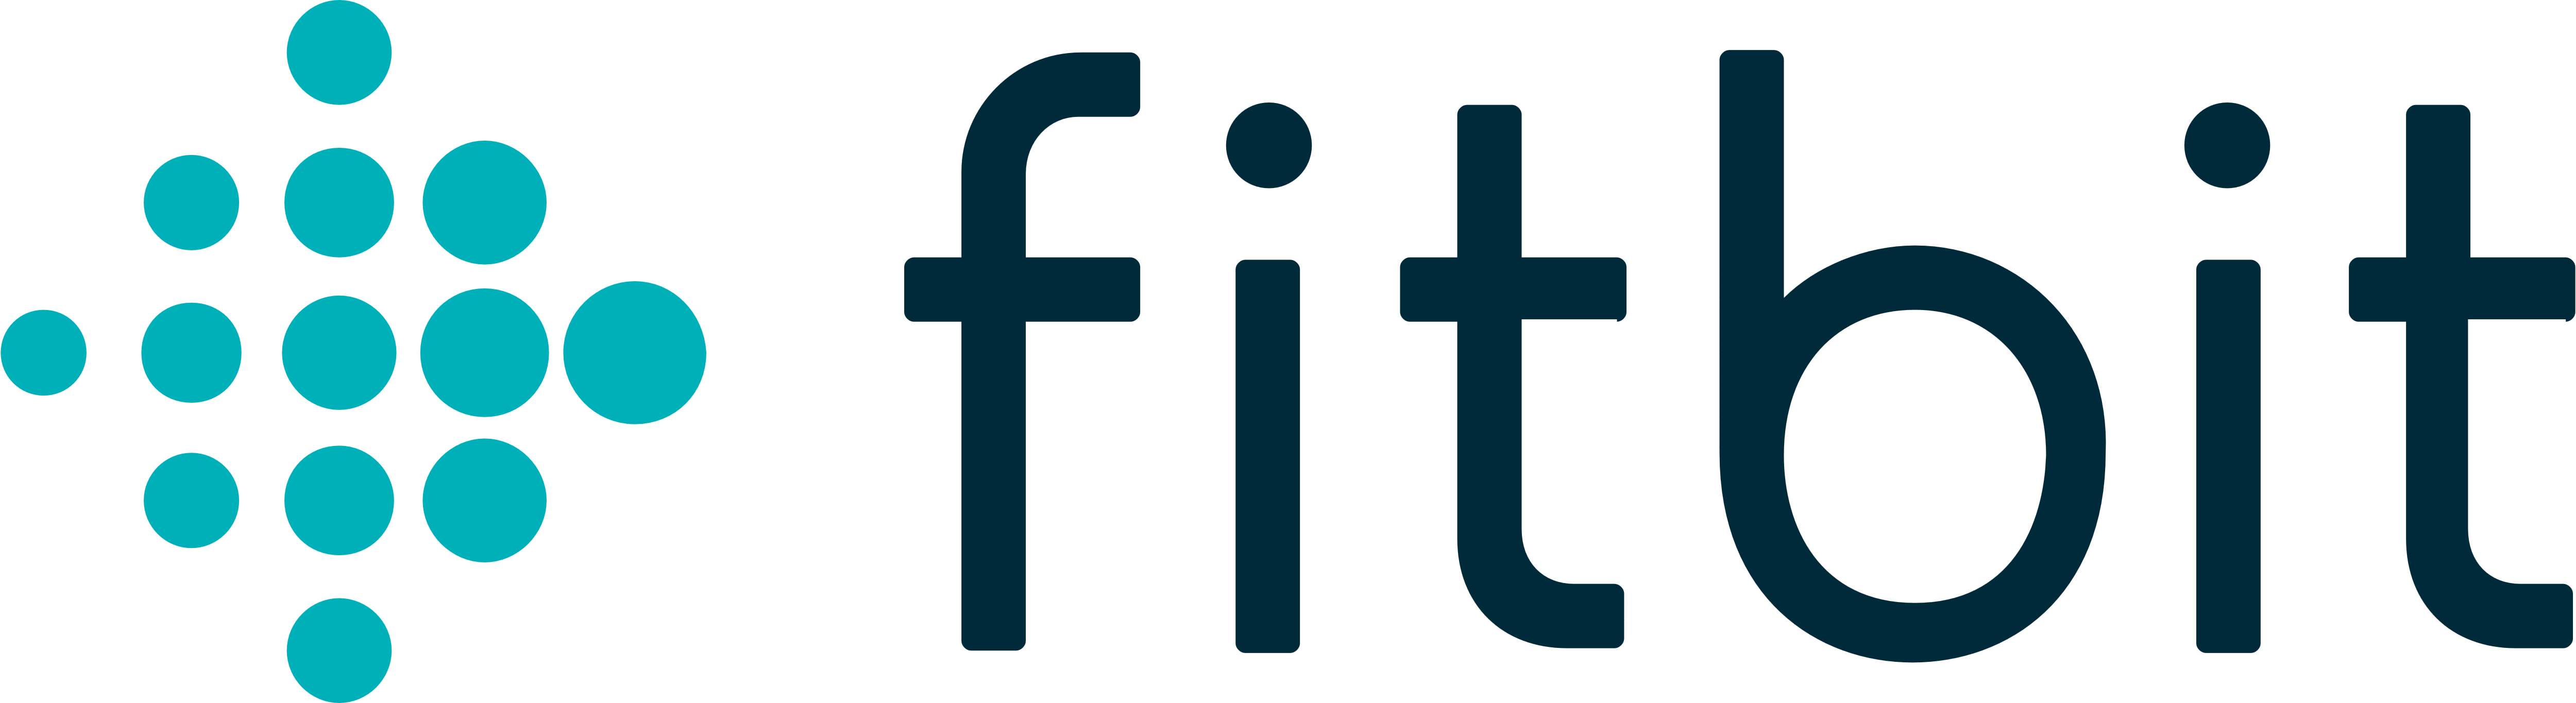 Fitbit â€“ Logos Download